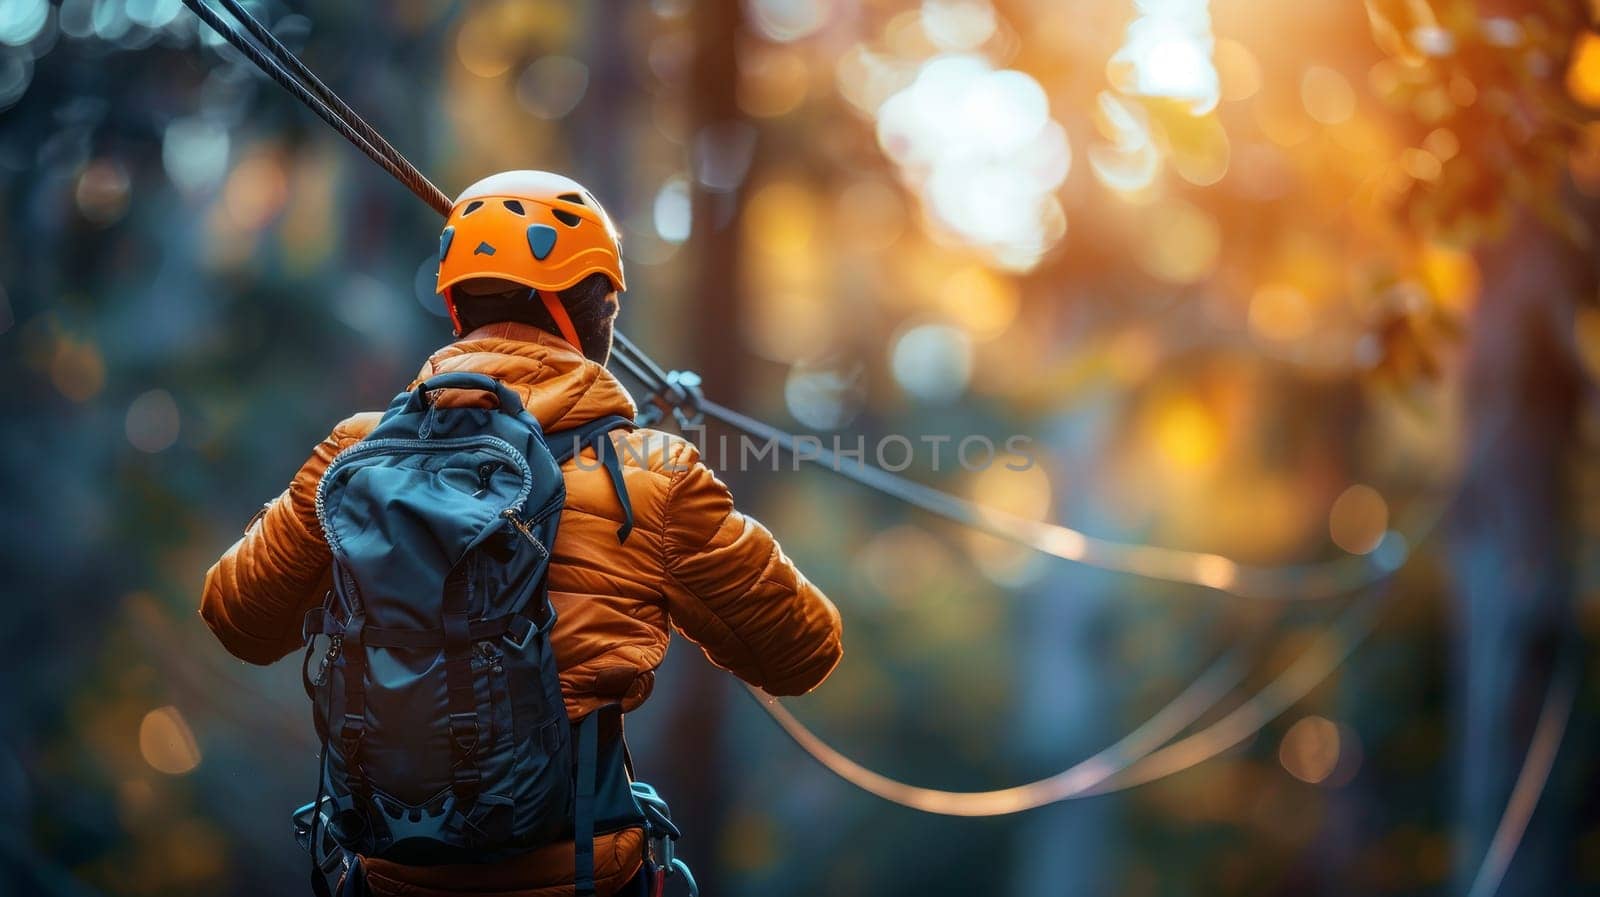 Boy in safety gear on forest adventure